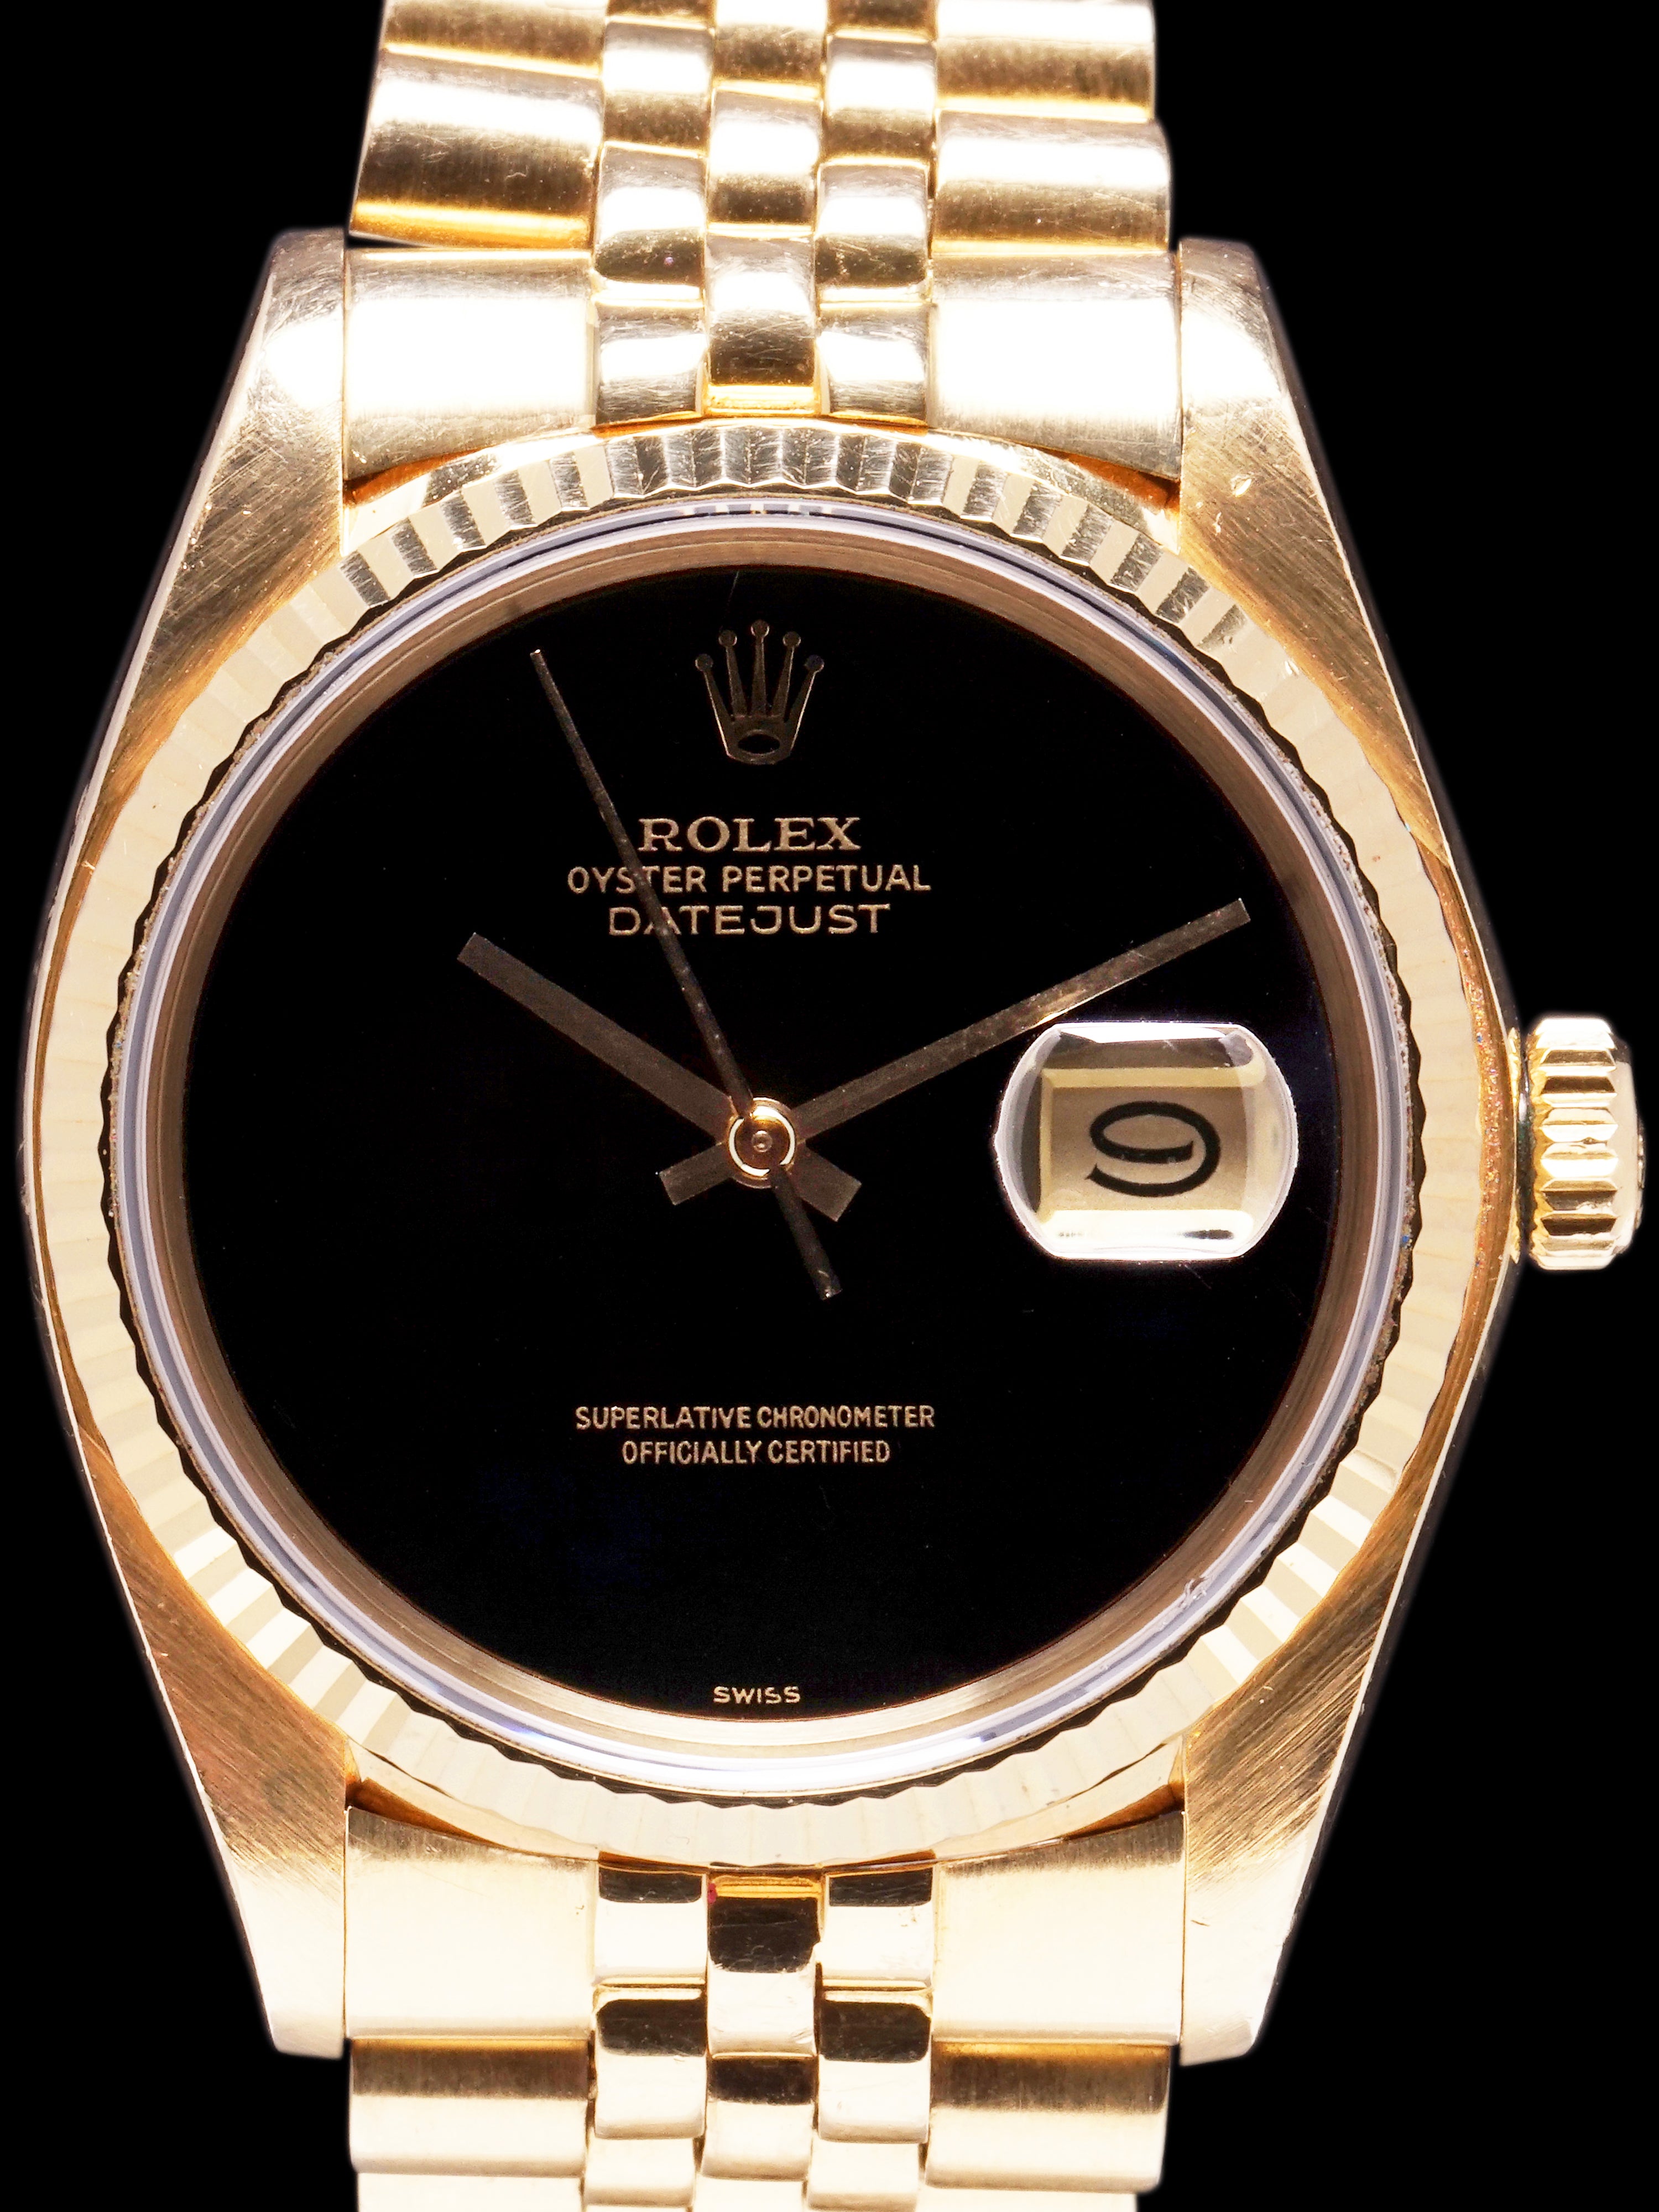 FS: 1980 Rolex Datejust (Ref. 16018 